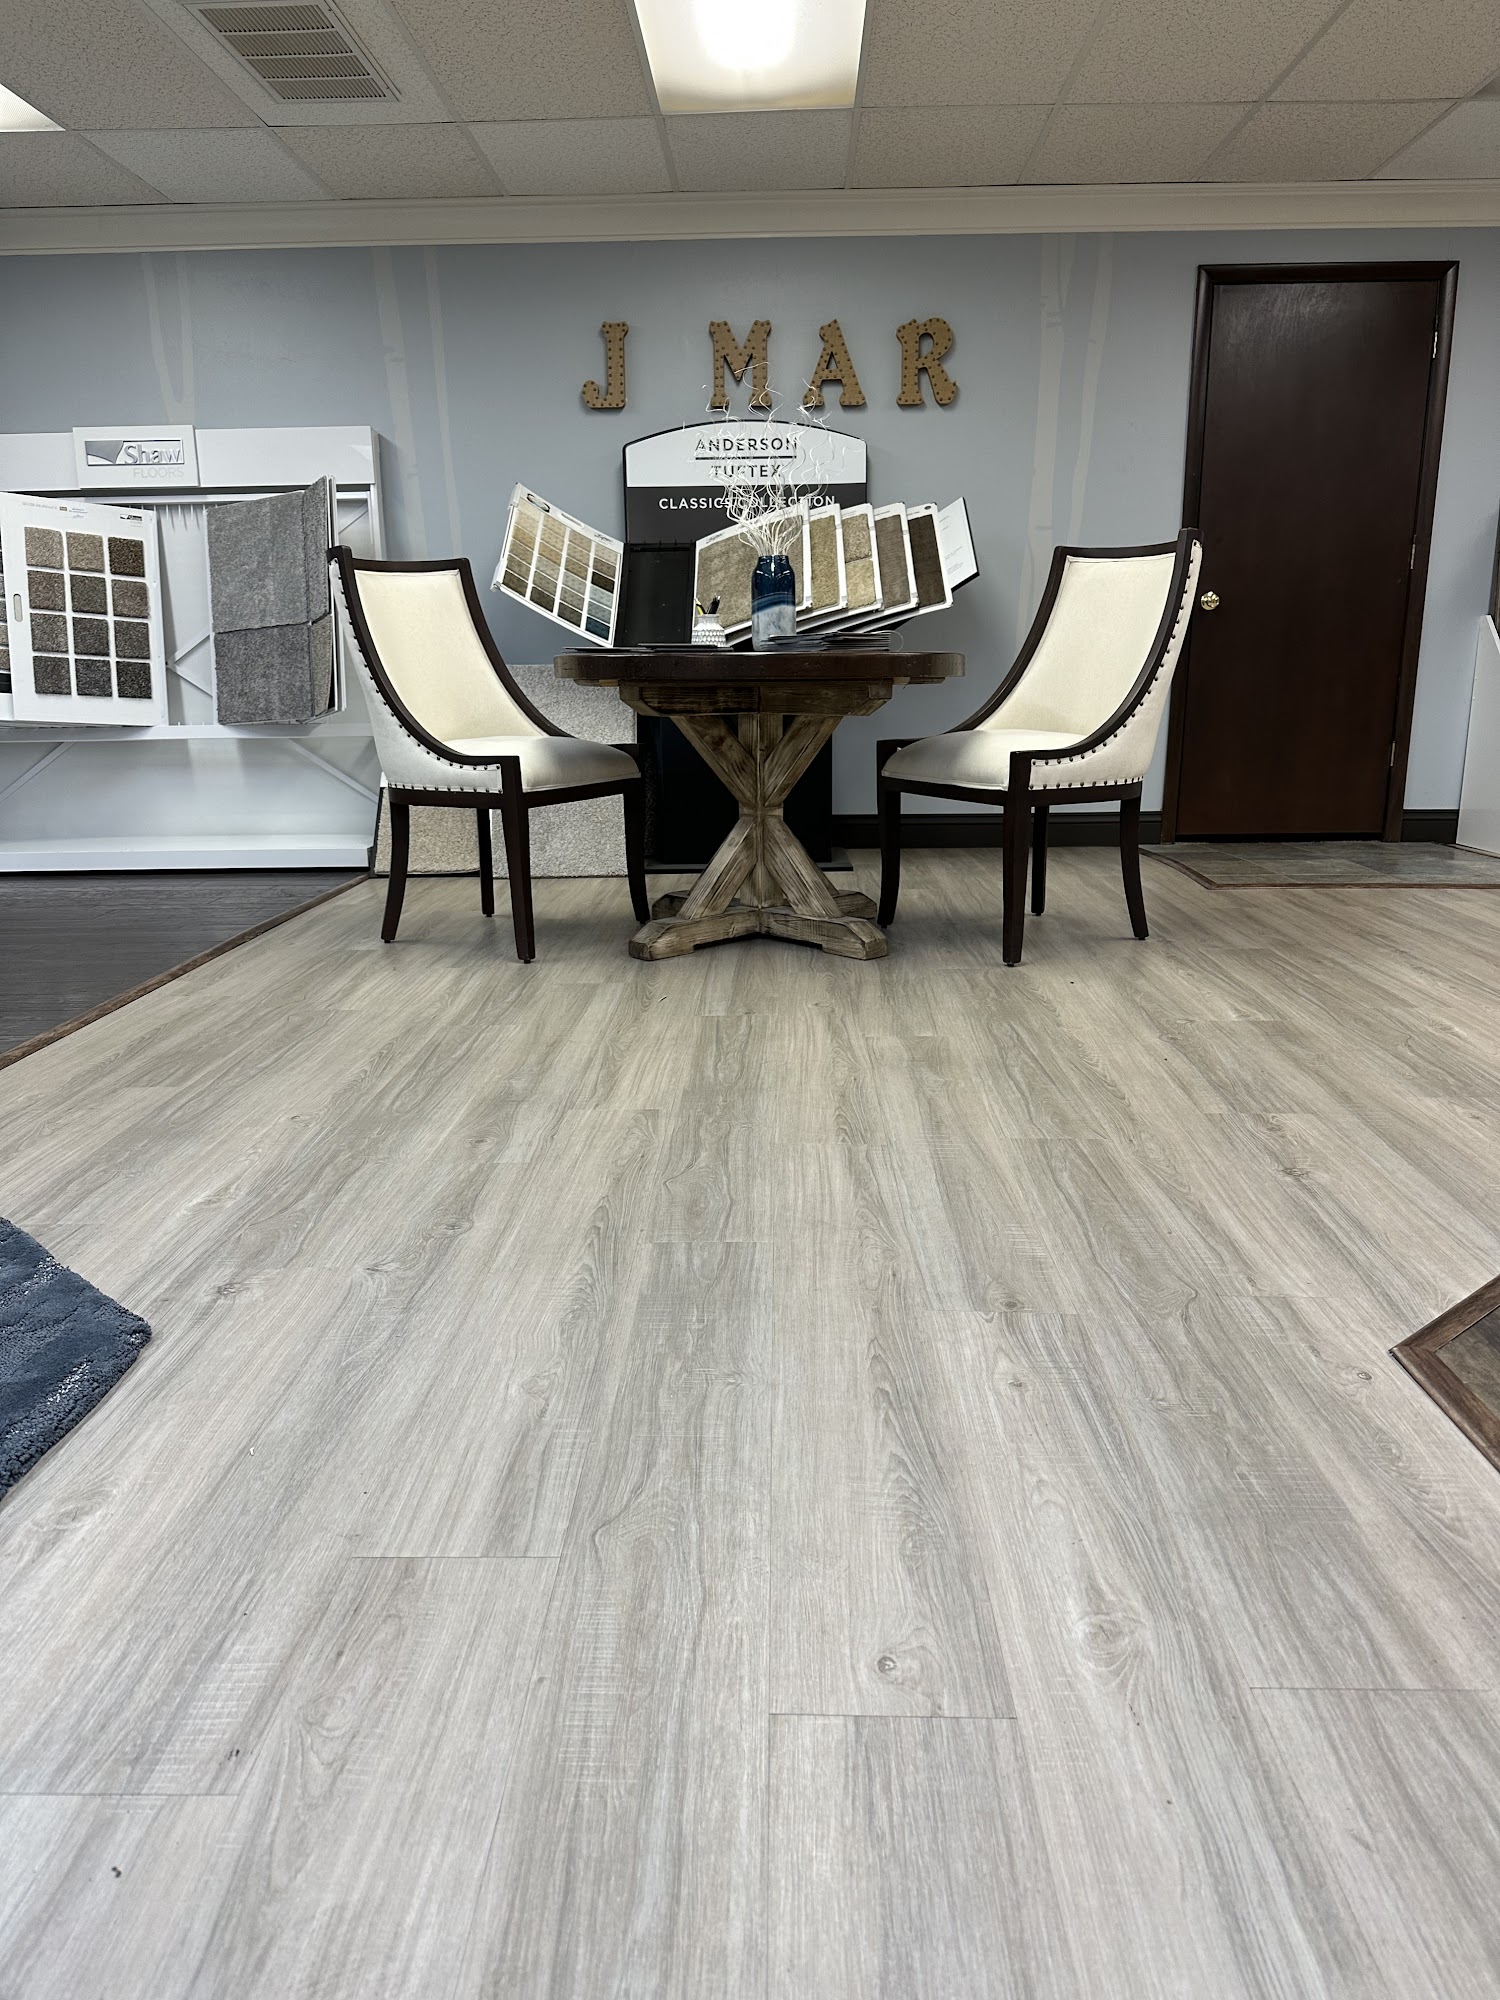 J-Mar Flooring & Carpet Cleaning